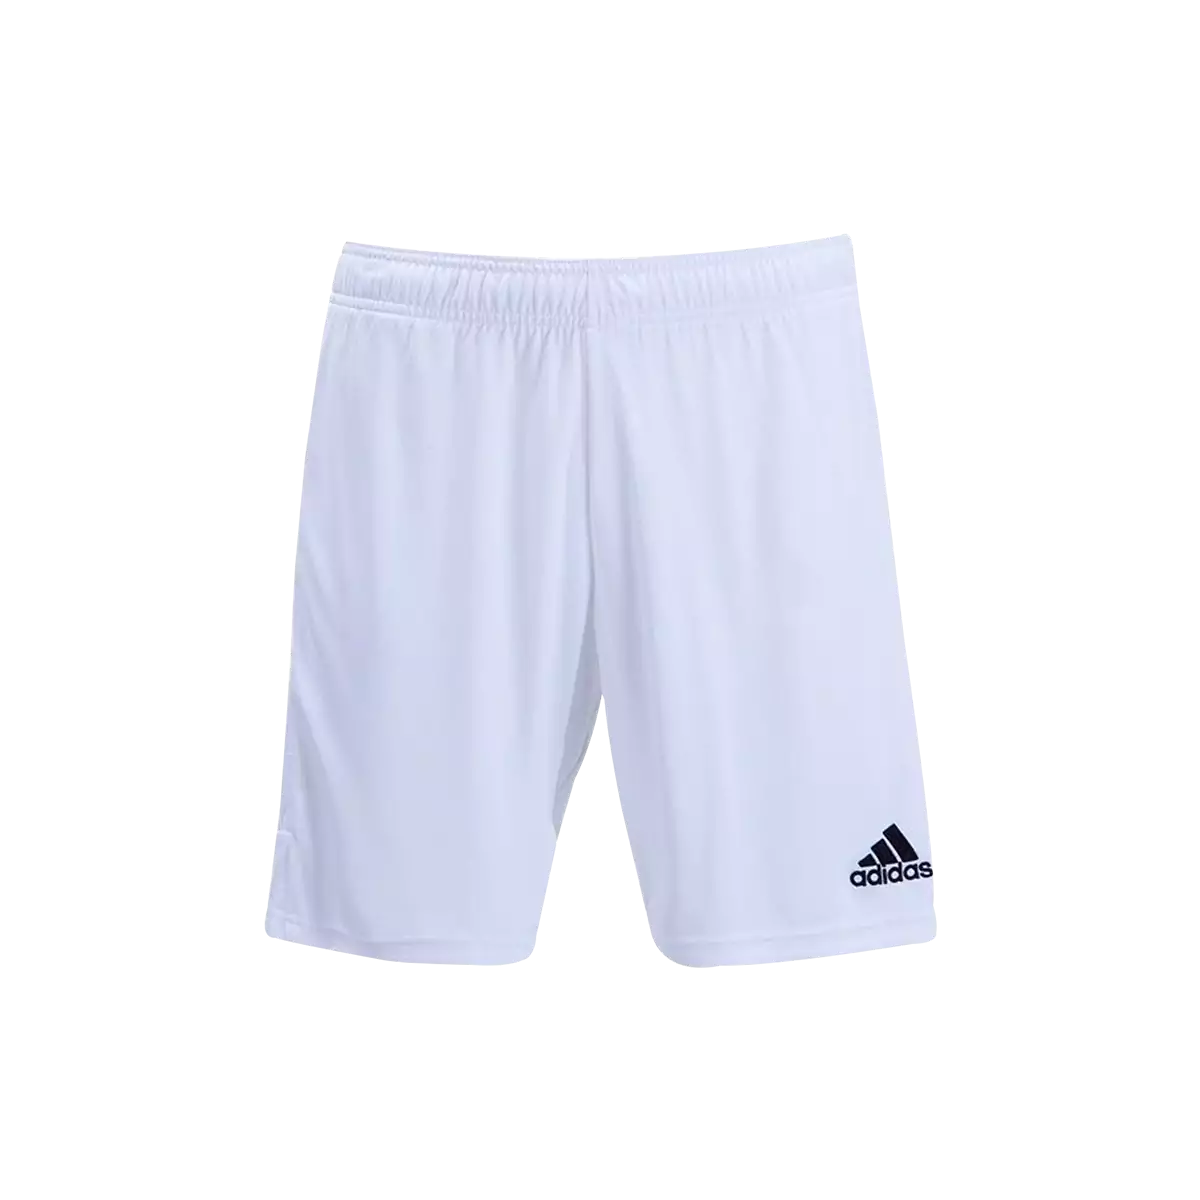 Adidas Short Soccer Shorts